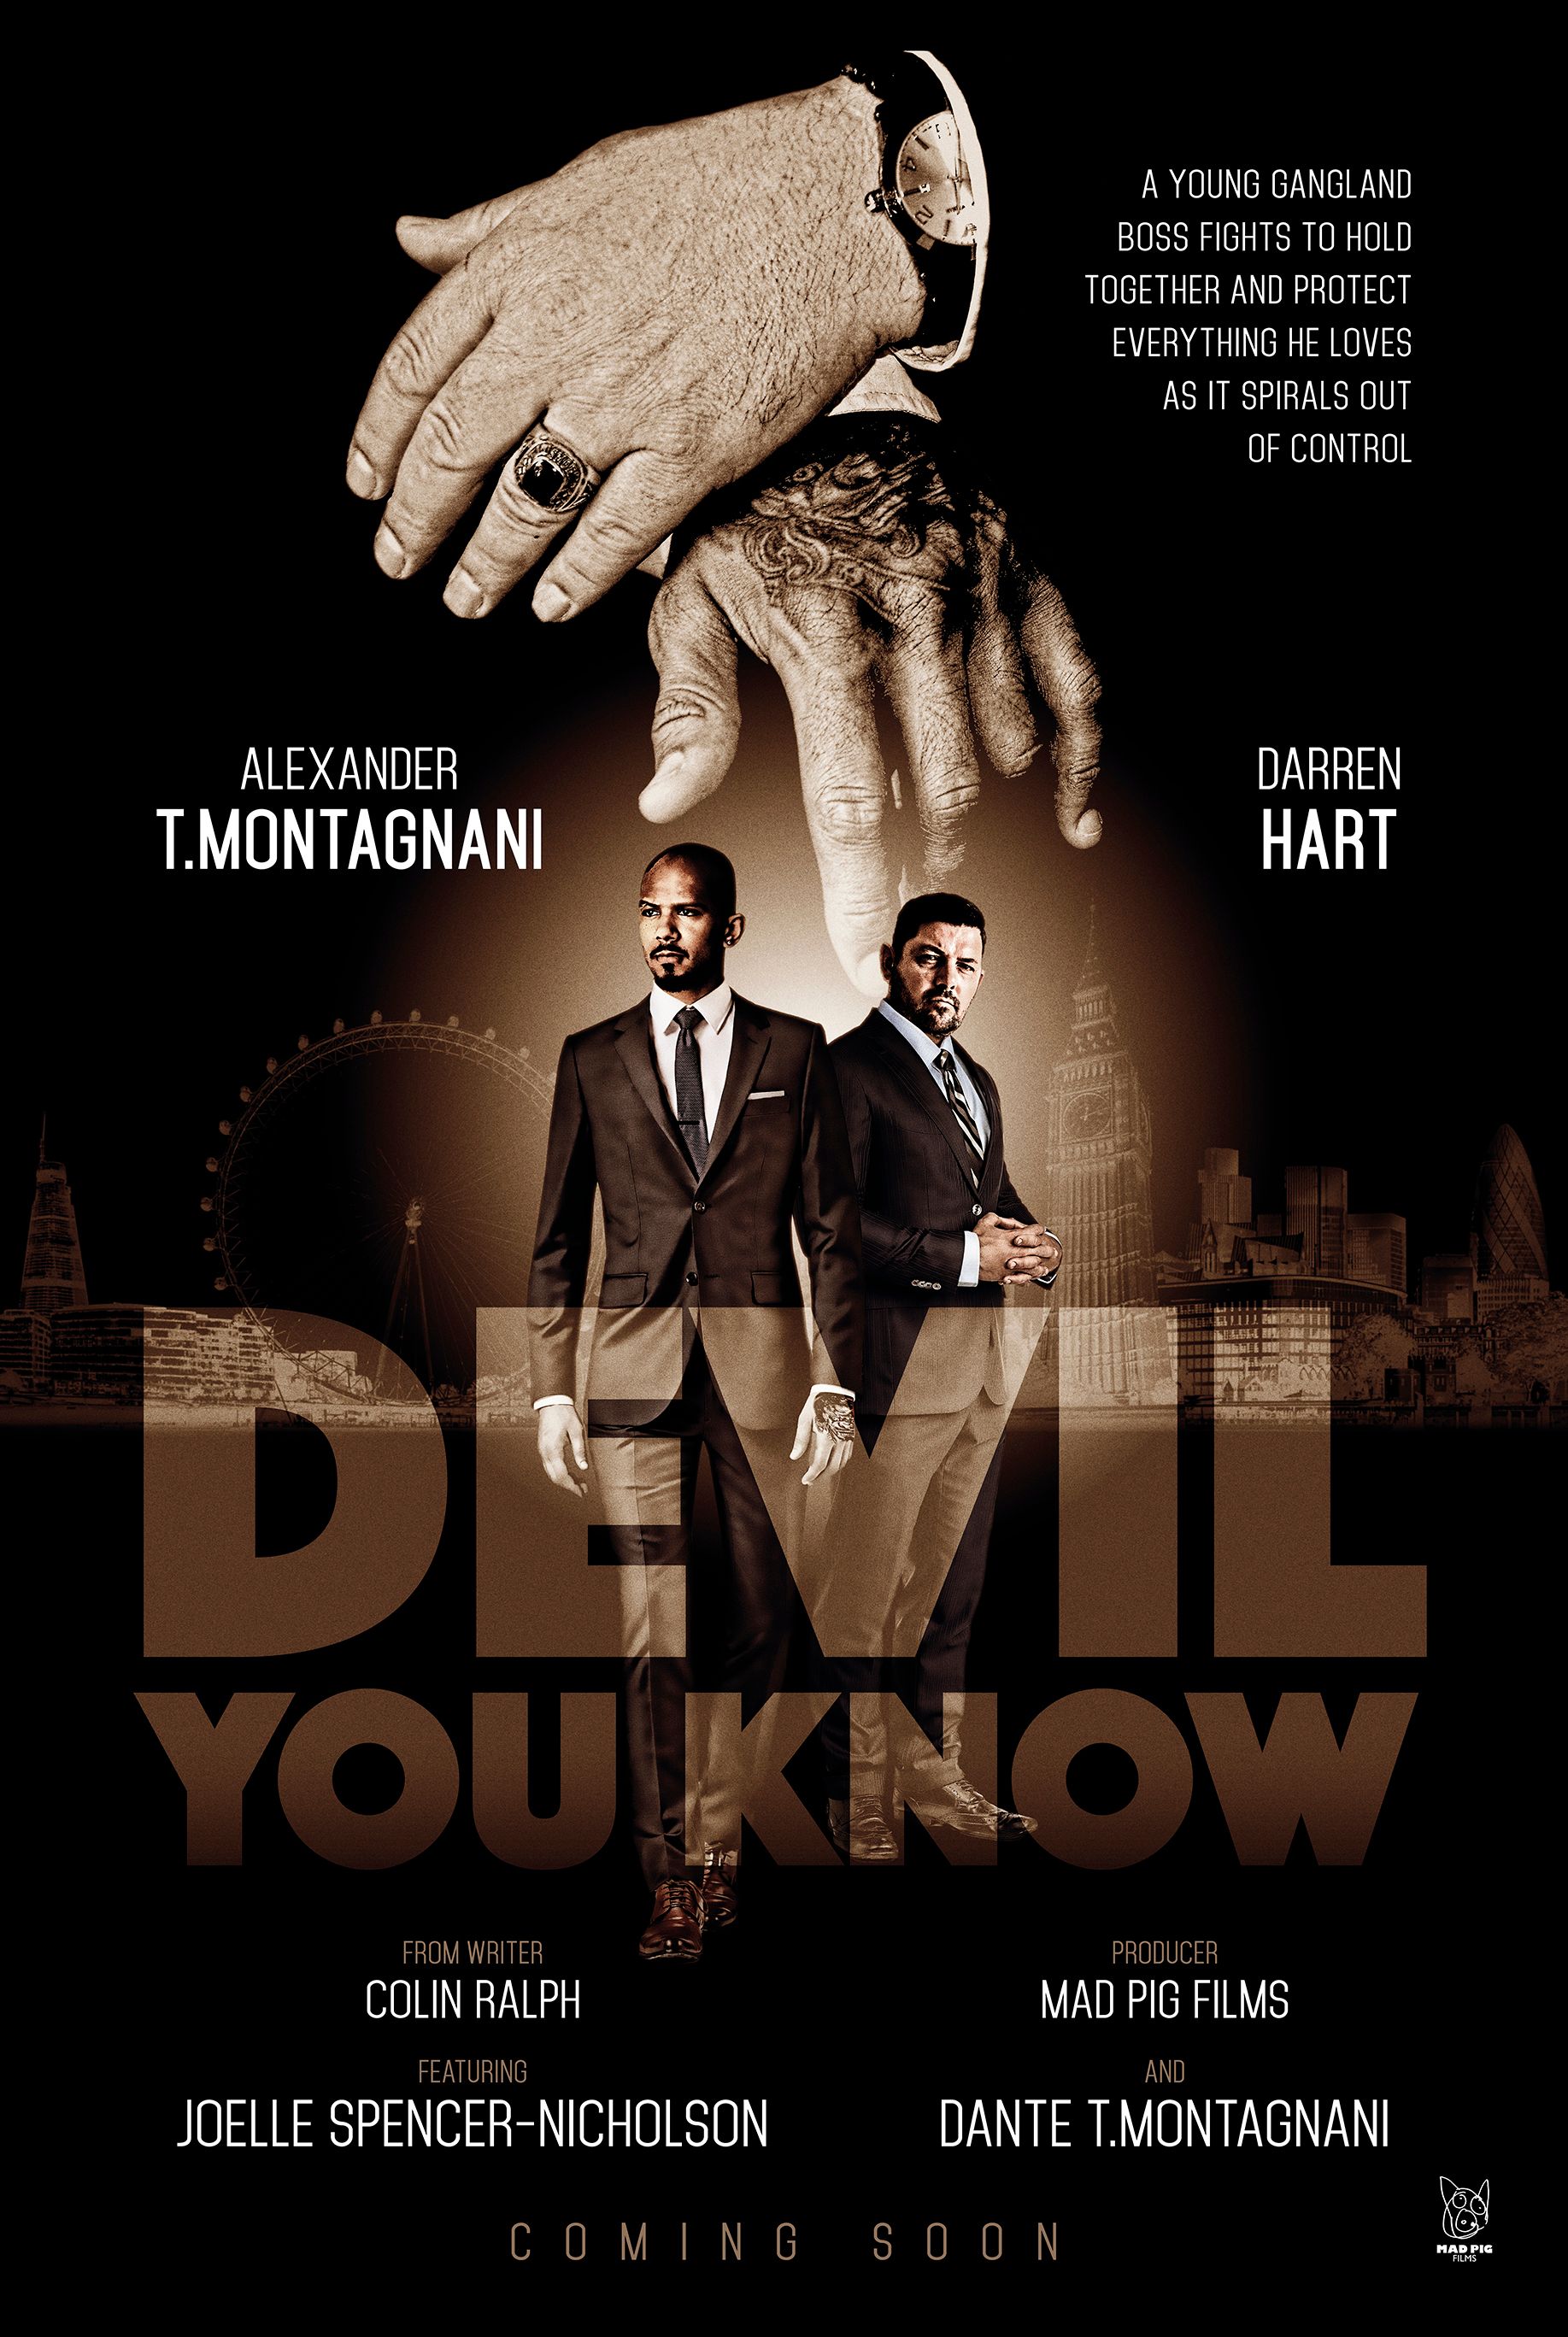 Watch The Devil You Know · Season 1 Full Episodes Free Online - Plex